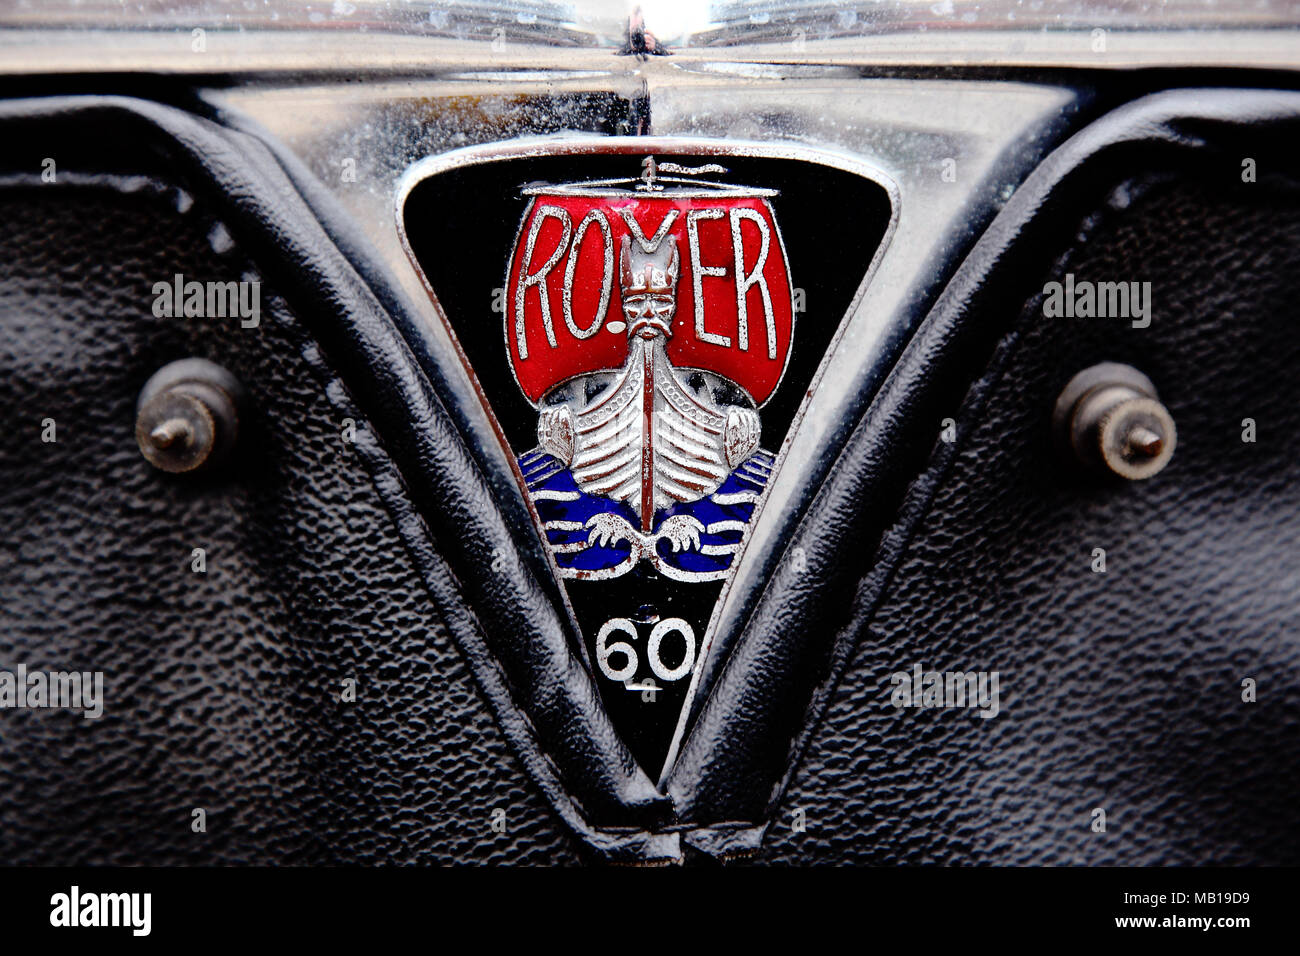 Vintage logo Rover della nave vichinga branding su un Rover 60 ornamento del cofano. Foto Stock